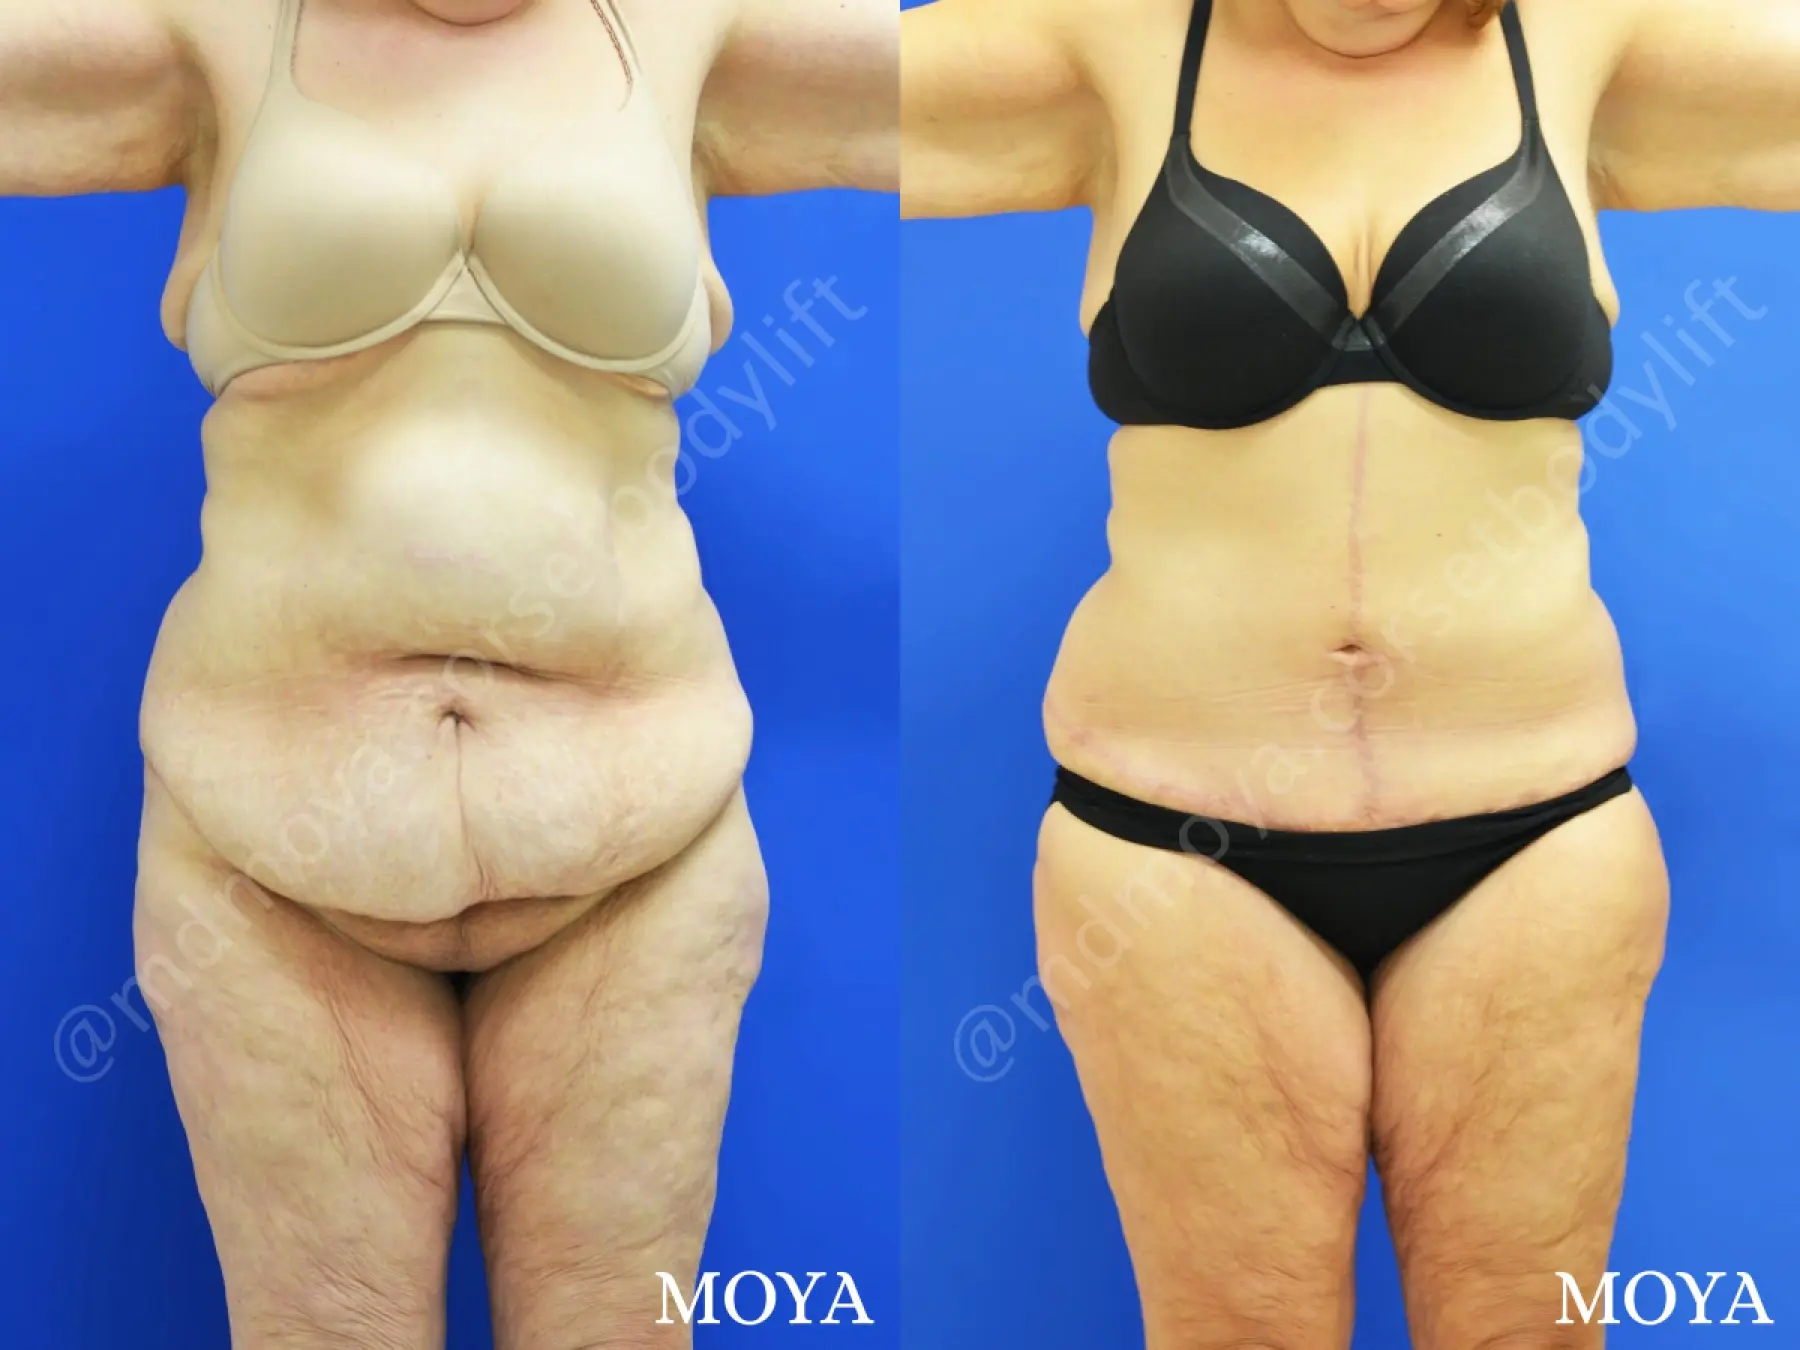 Fleur-de-lis Tummy Tuck (ltd):  BMI 34 - Before and After 1